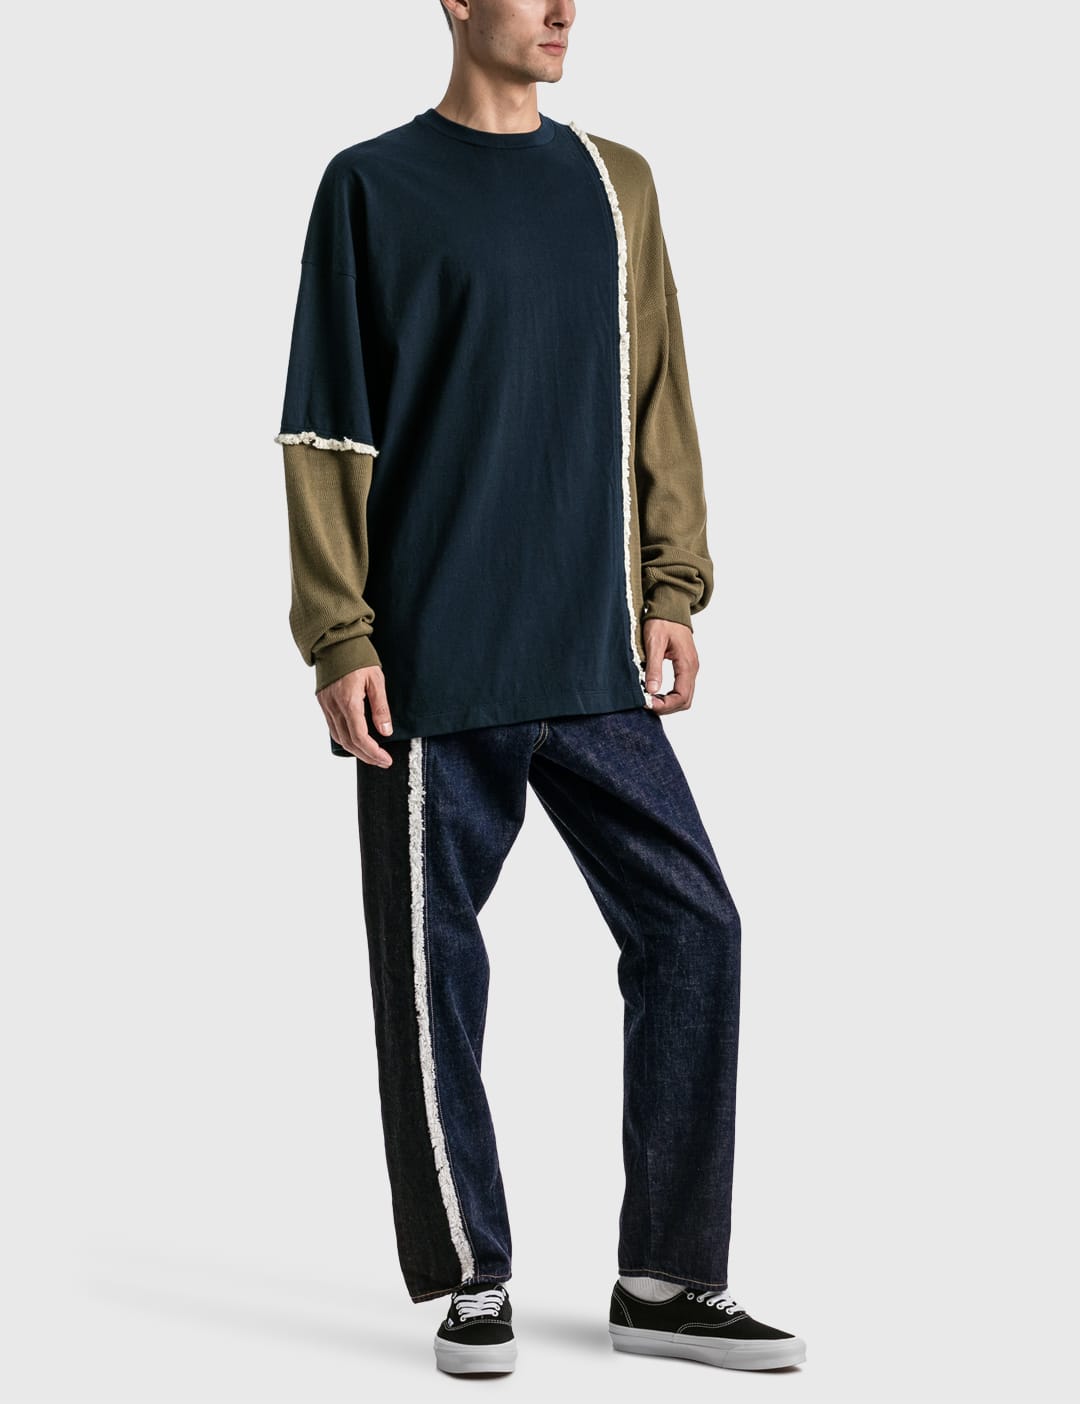 Rotol - Franken Long Sleeve T-shirt | HBX - Globally Curated